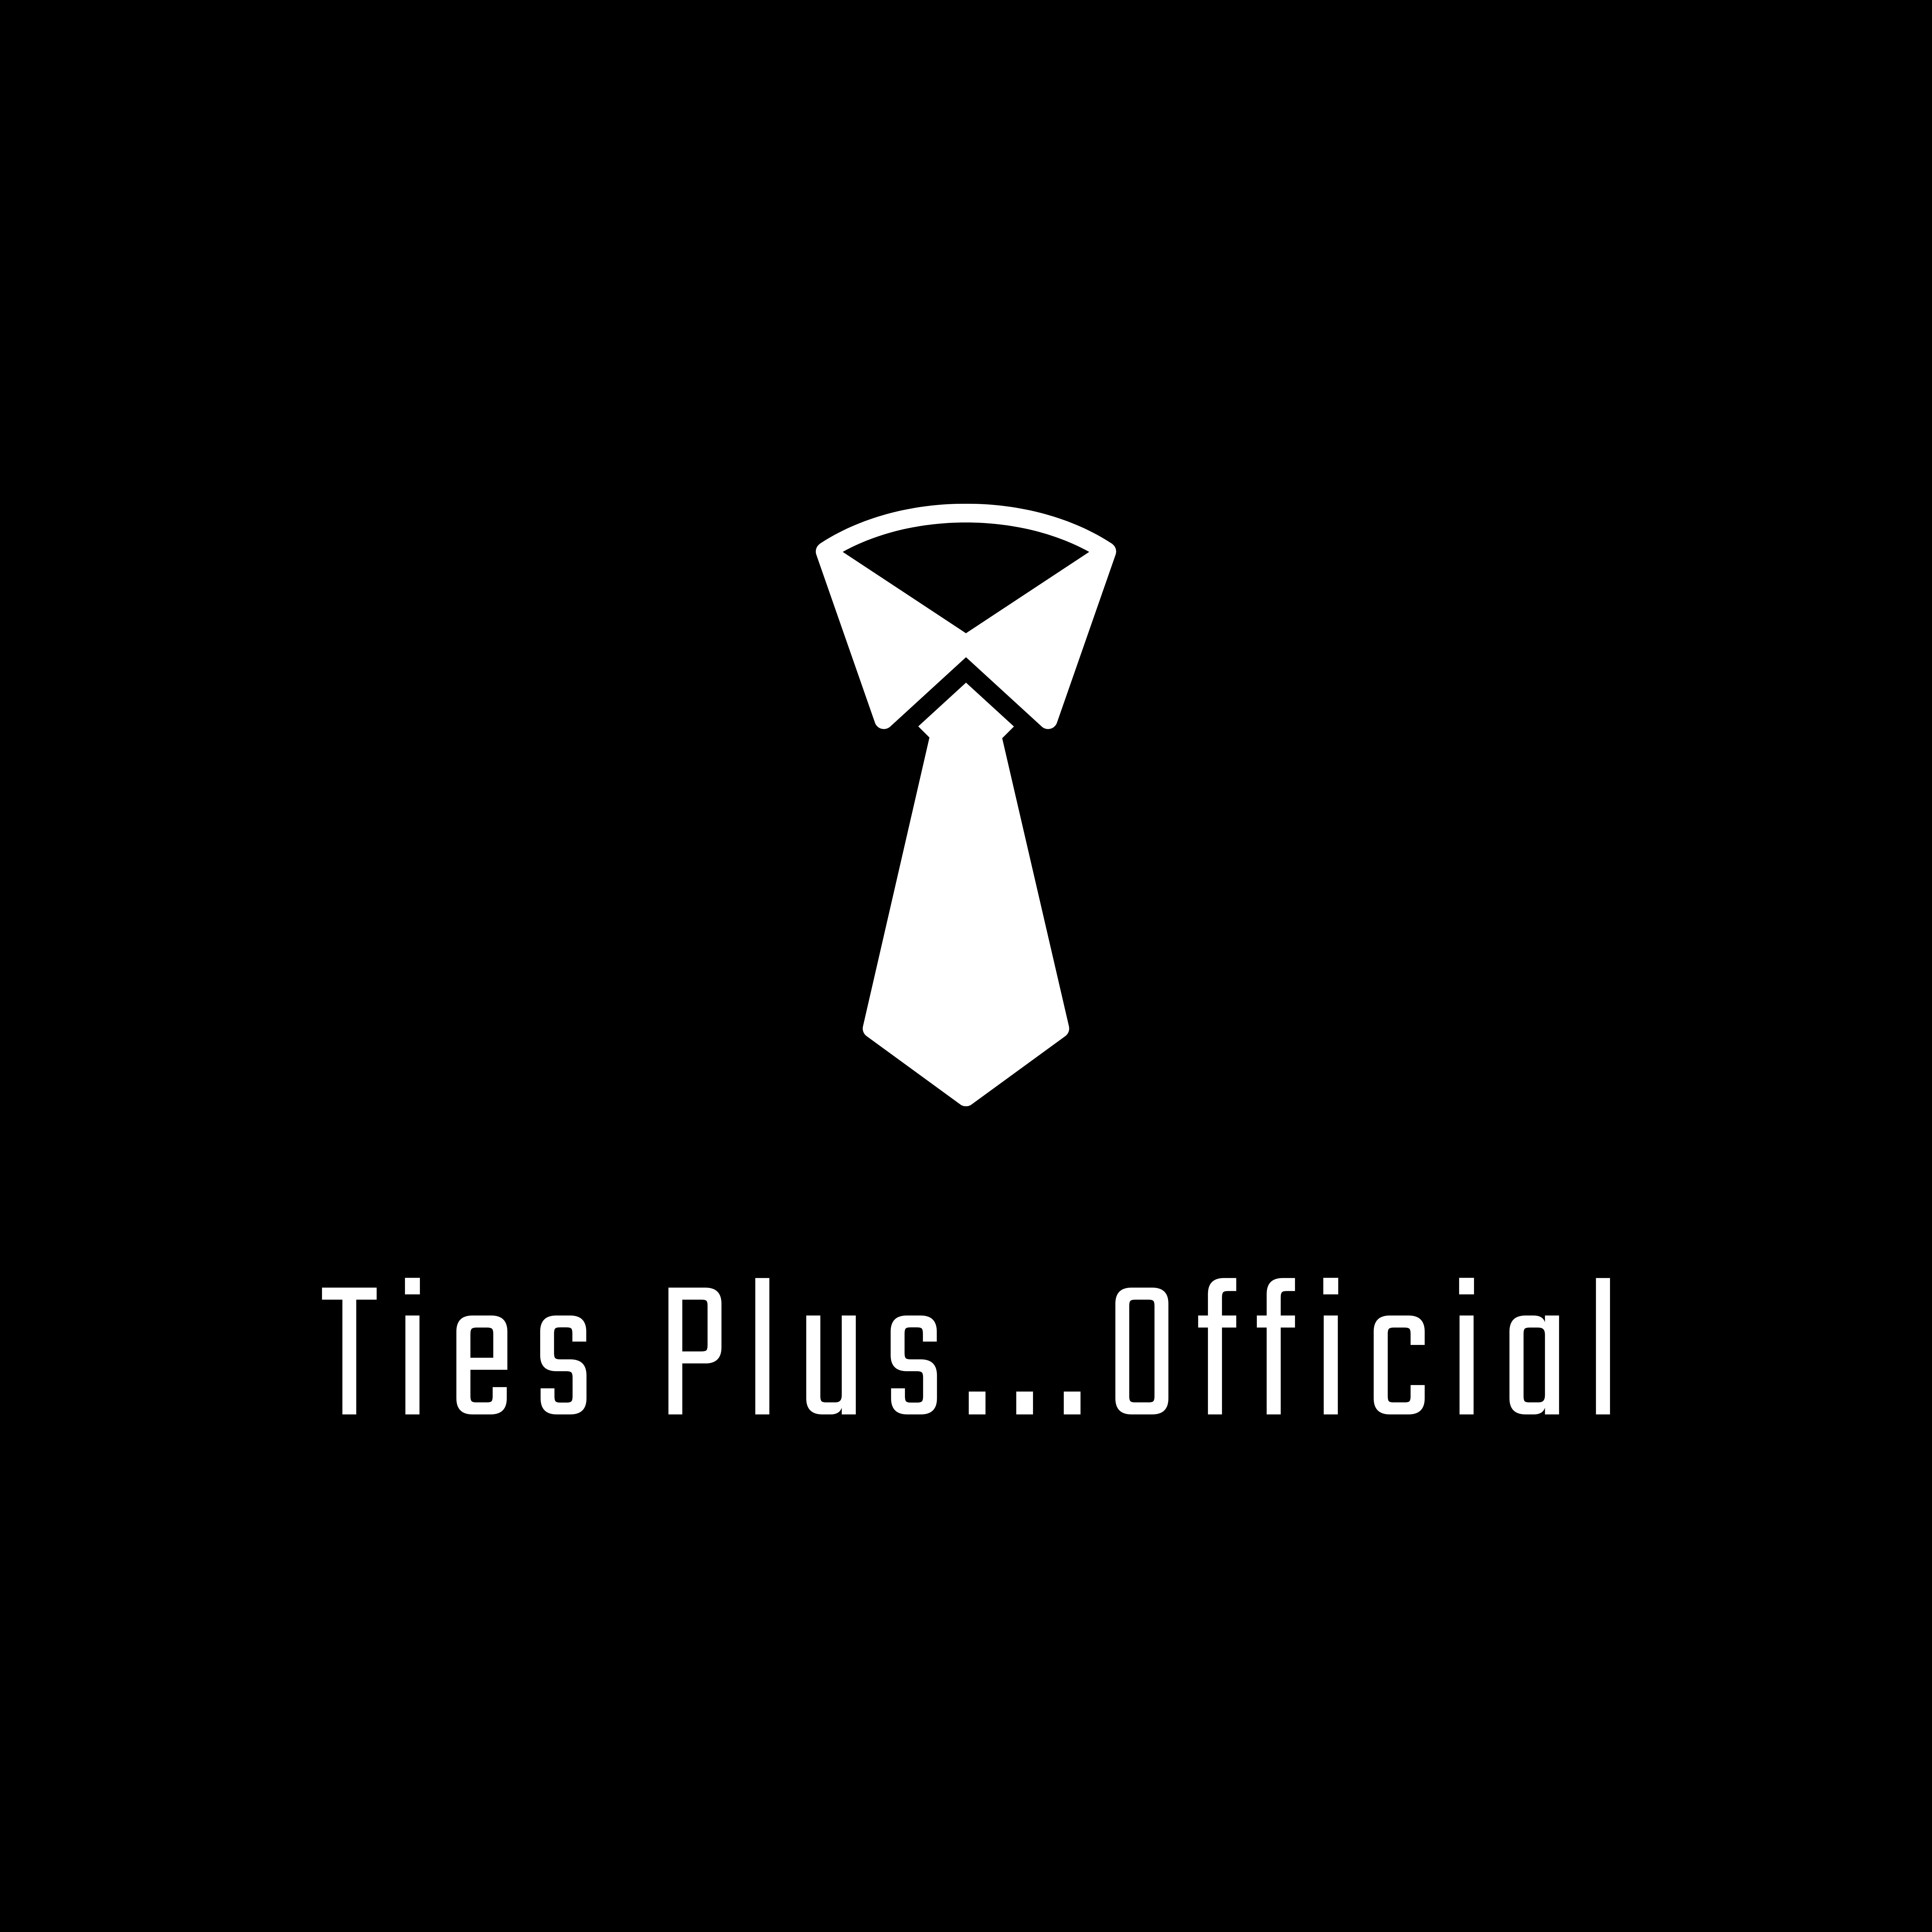 Ties Plus Official